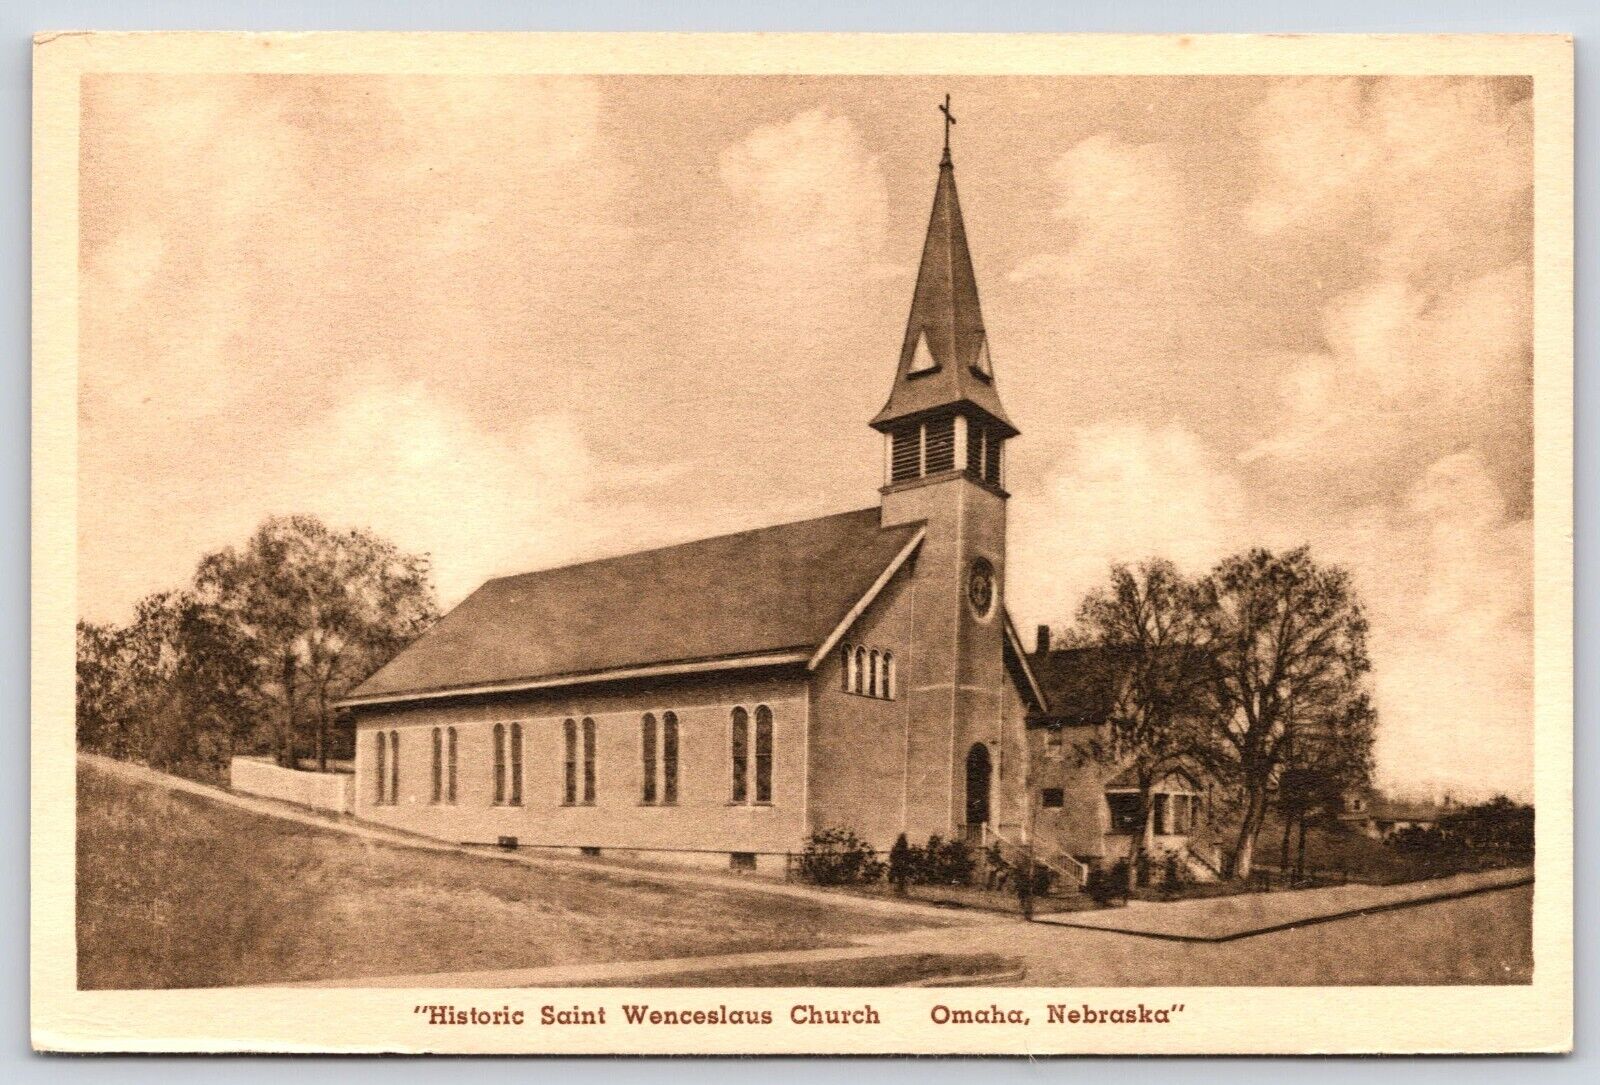 Nebraska Omaha Historic Saint Wenceslaus Church Vintage Postcard